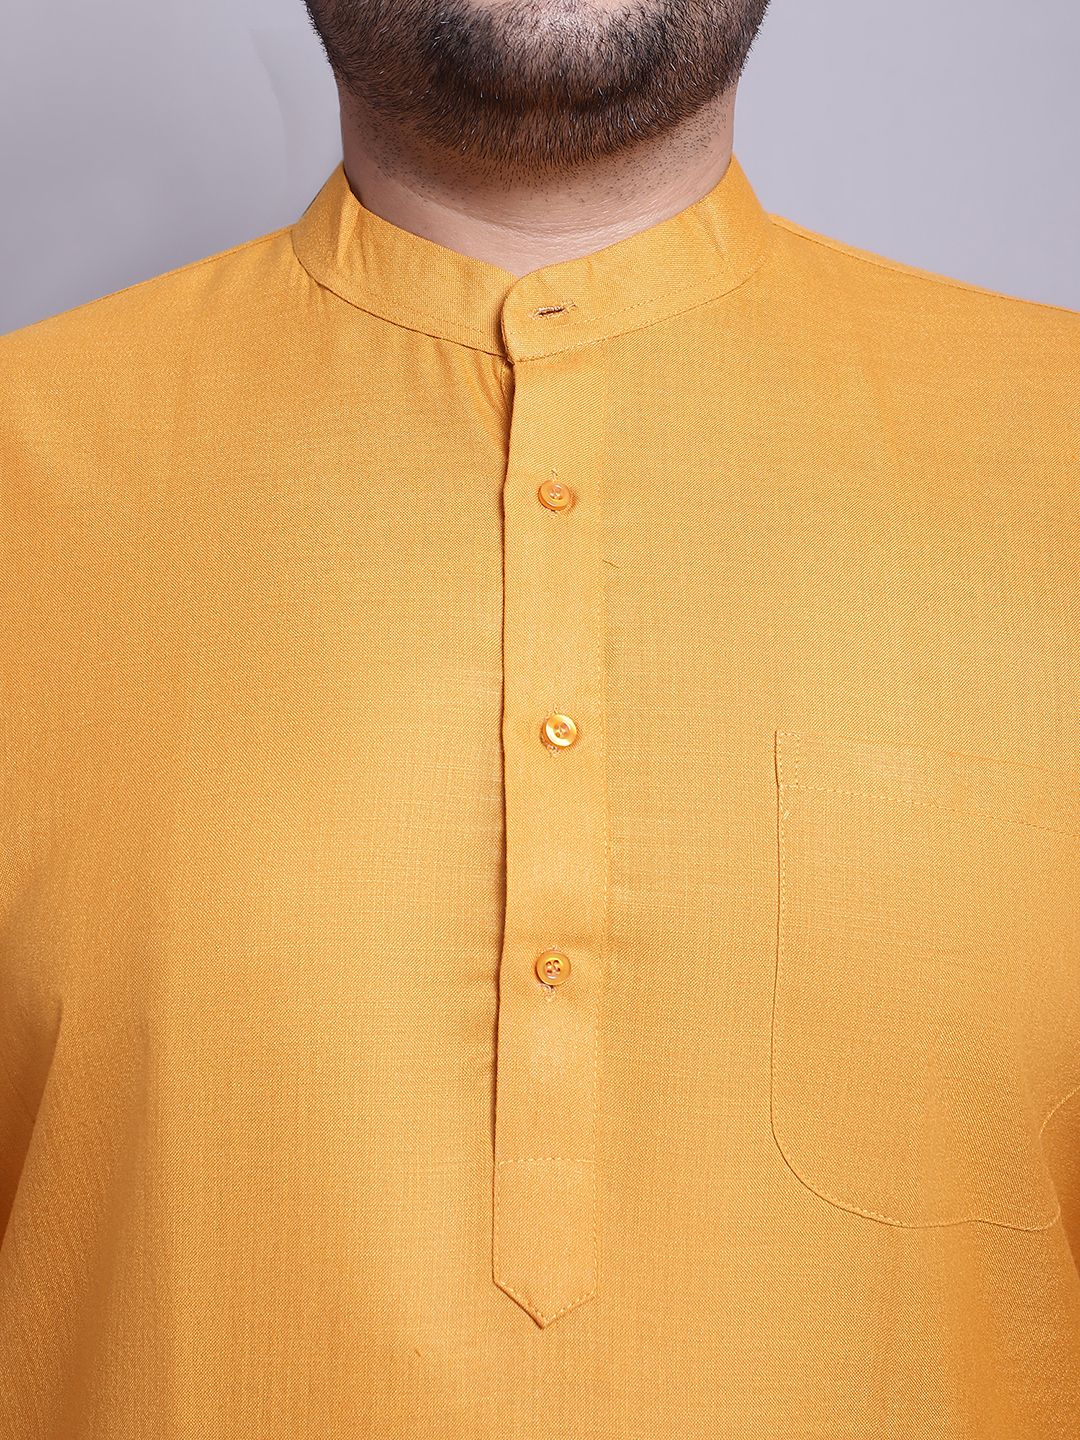 Men's Cotton Blend Mustard Kurta & Yellow Printed Nehrujacket With White Pyjama